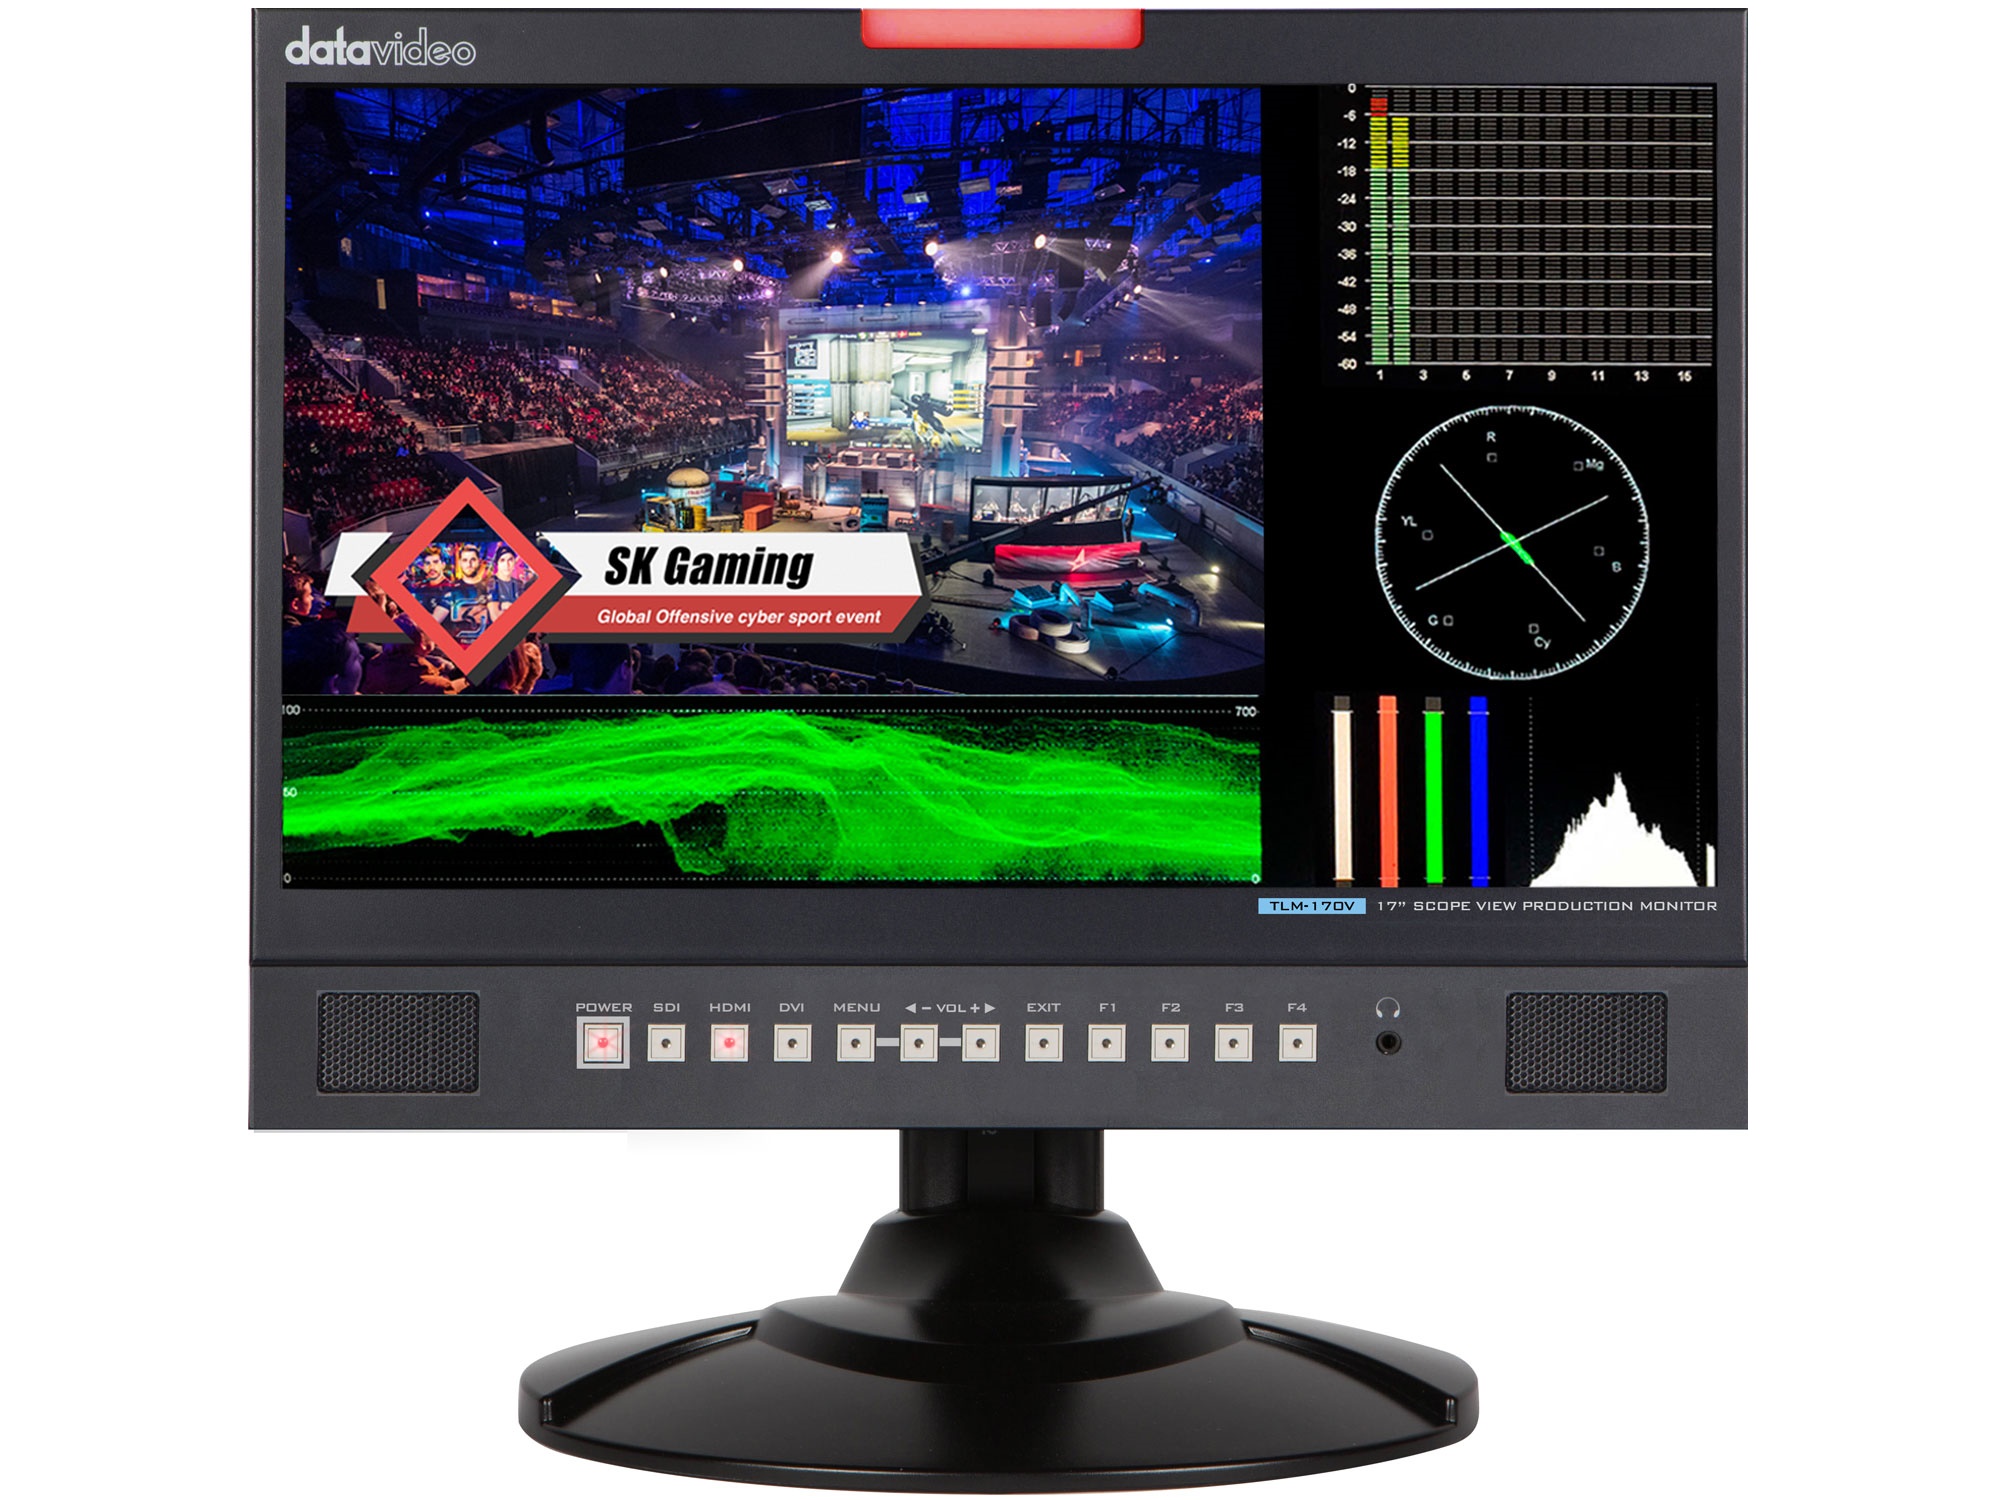 TLM-170V 17.3 inch Full HD Desktop Monitor by Datavideo